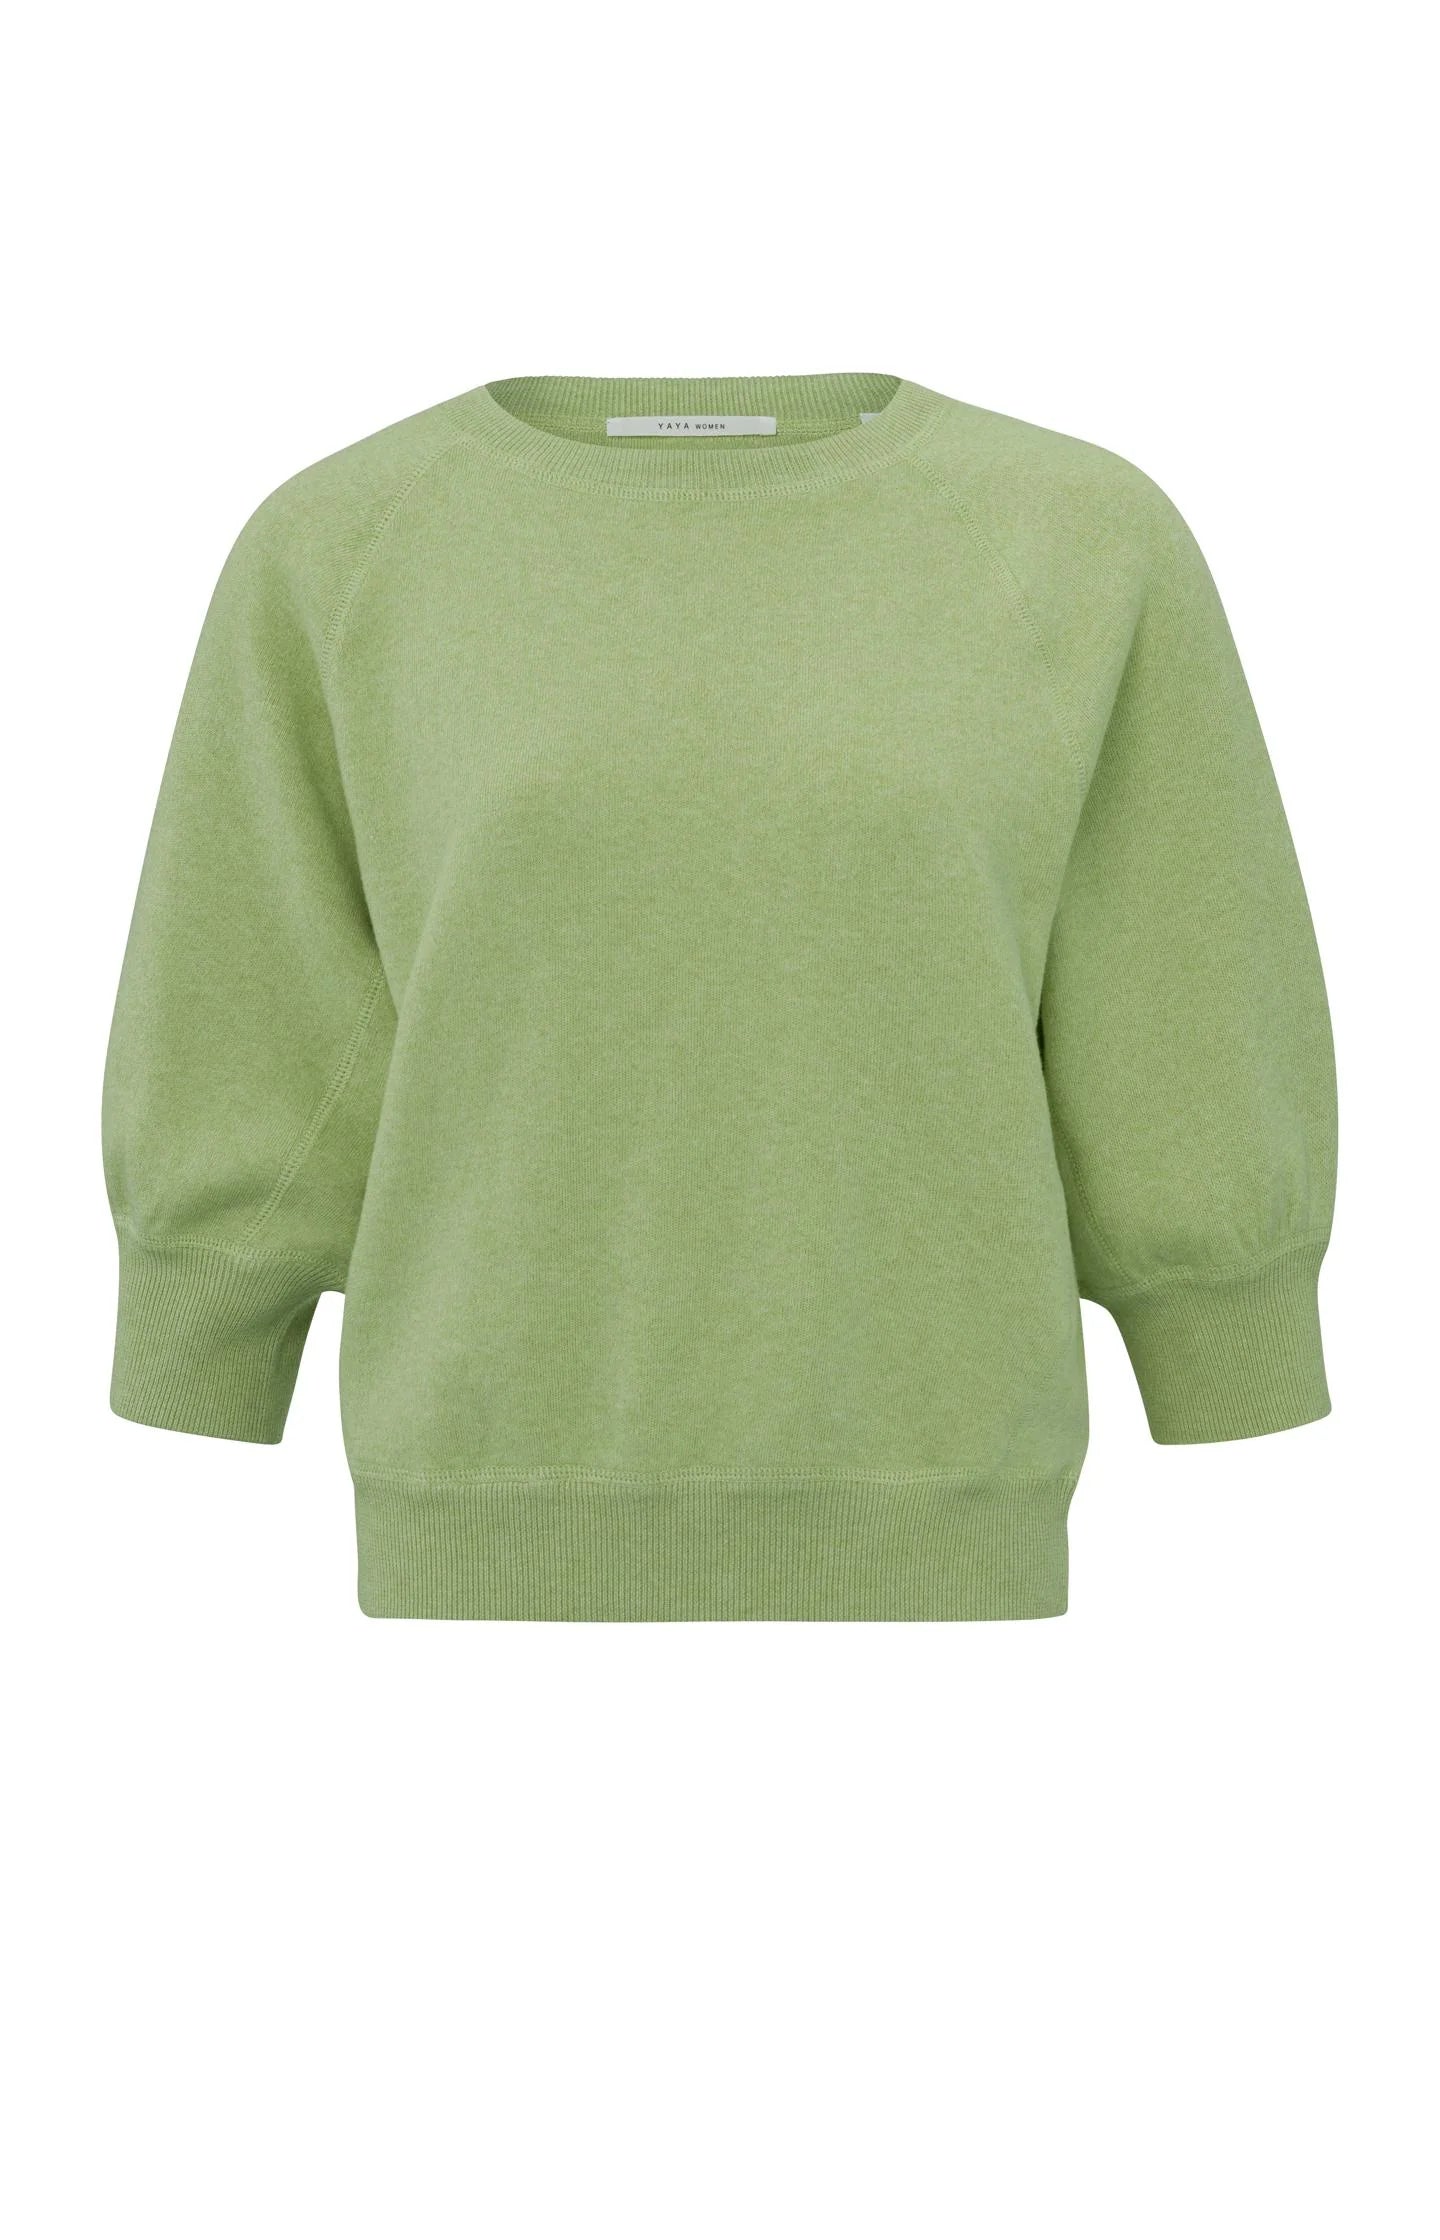 Raglan Sleeve Sweater in Green Melange